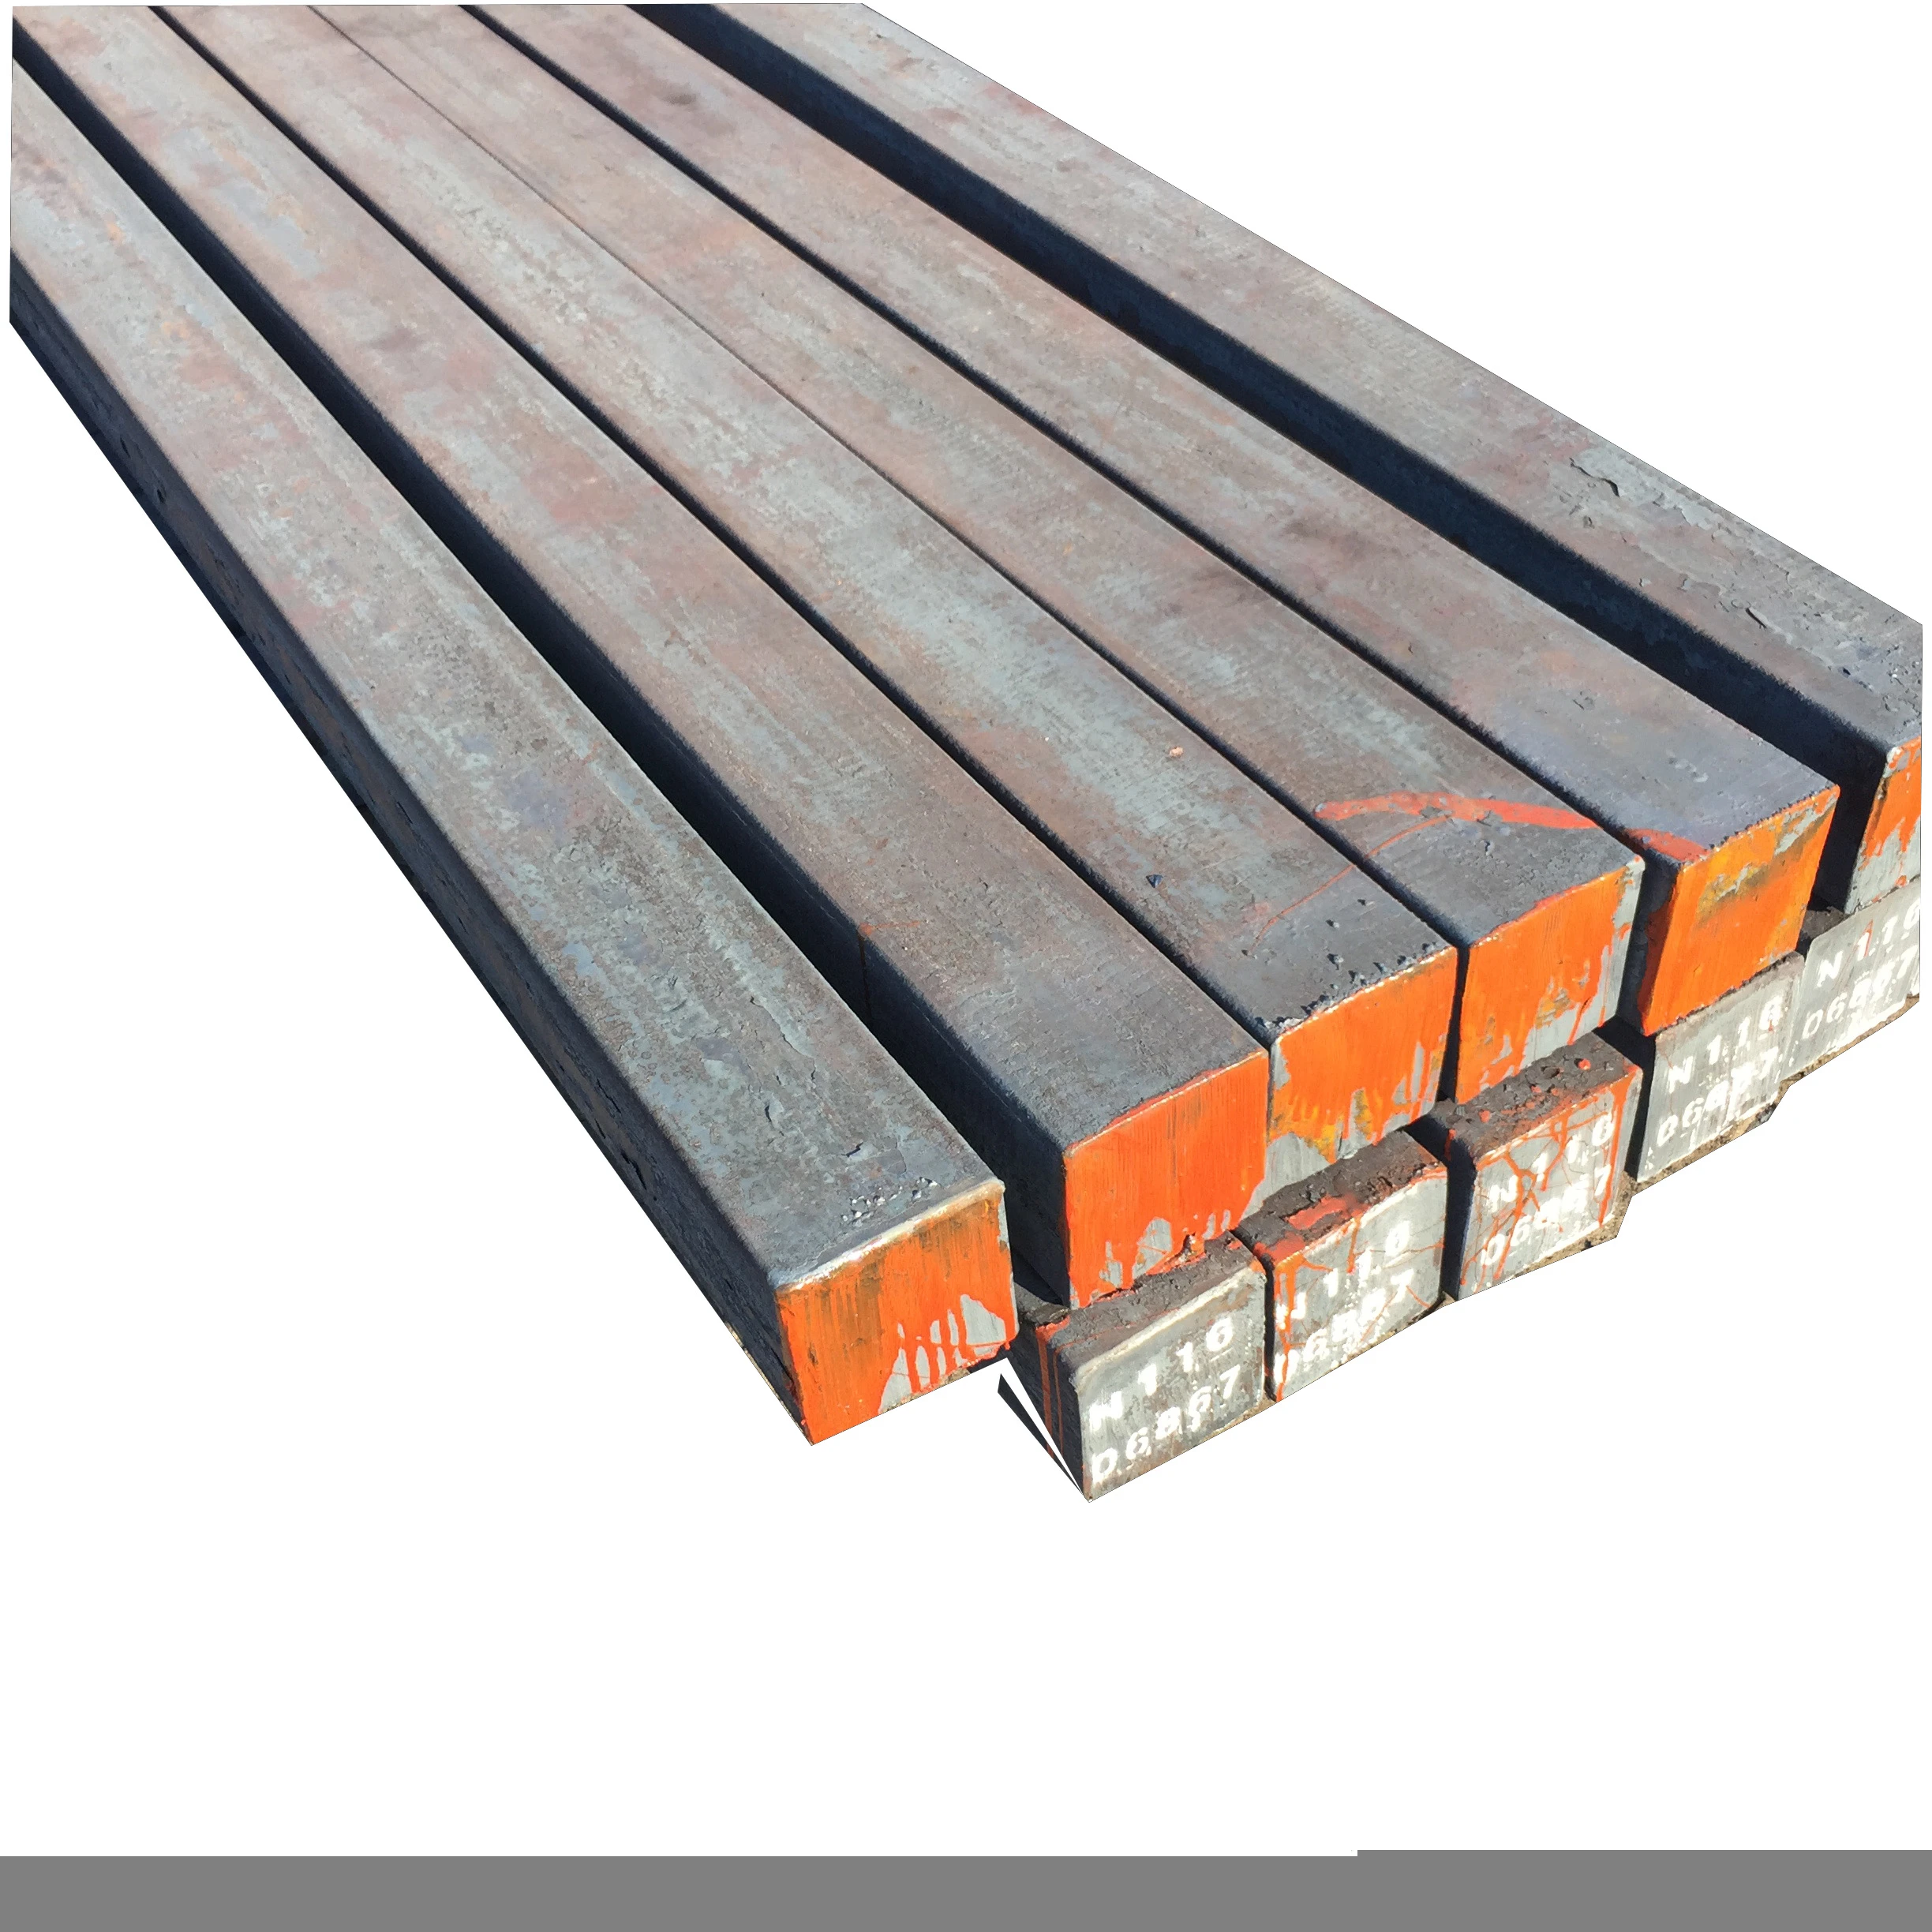 High Grade Rectangular Steel Billets, Steel Rectangular Bars in Wholesale